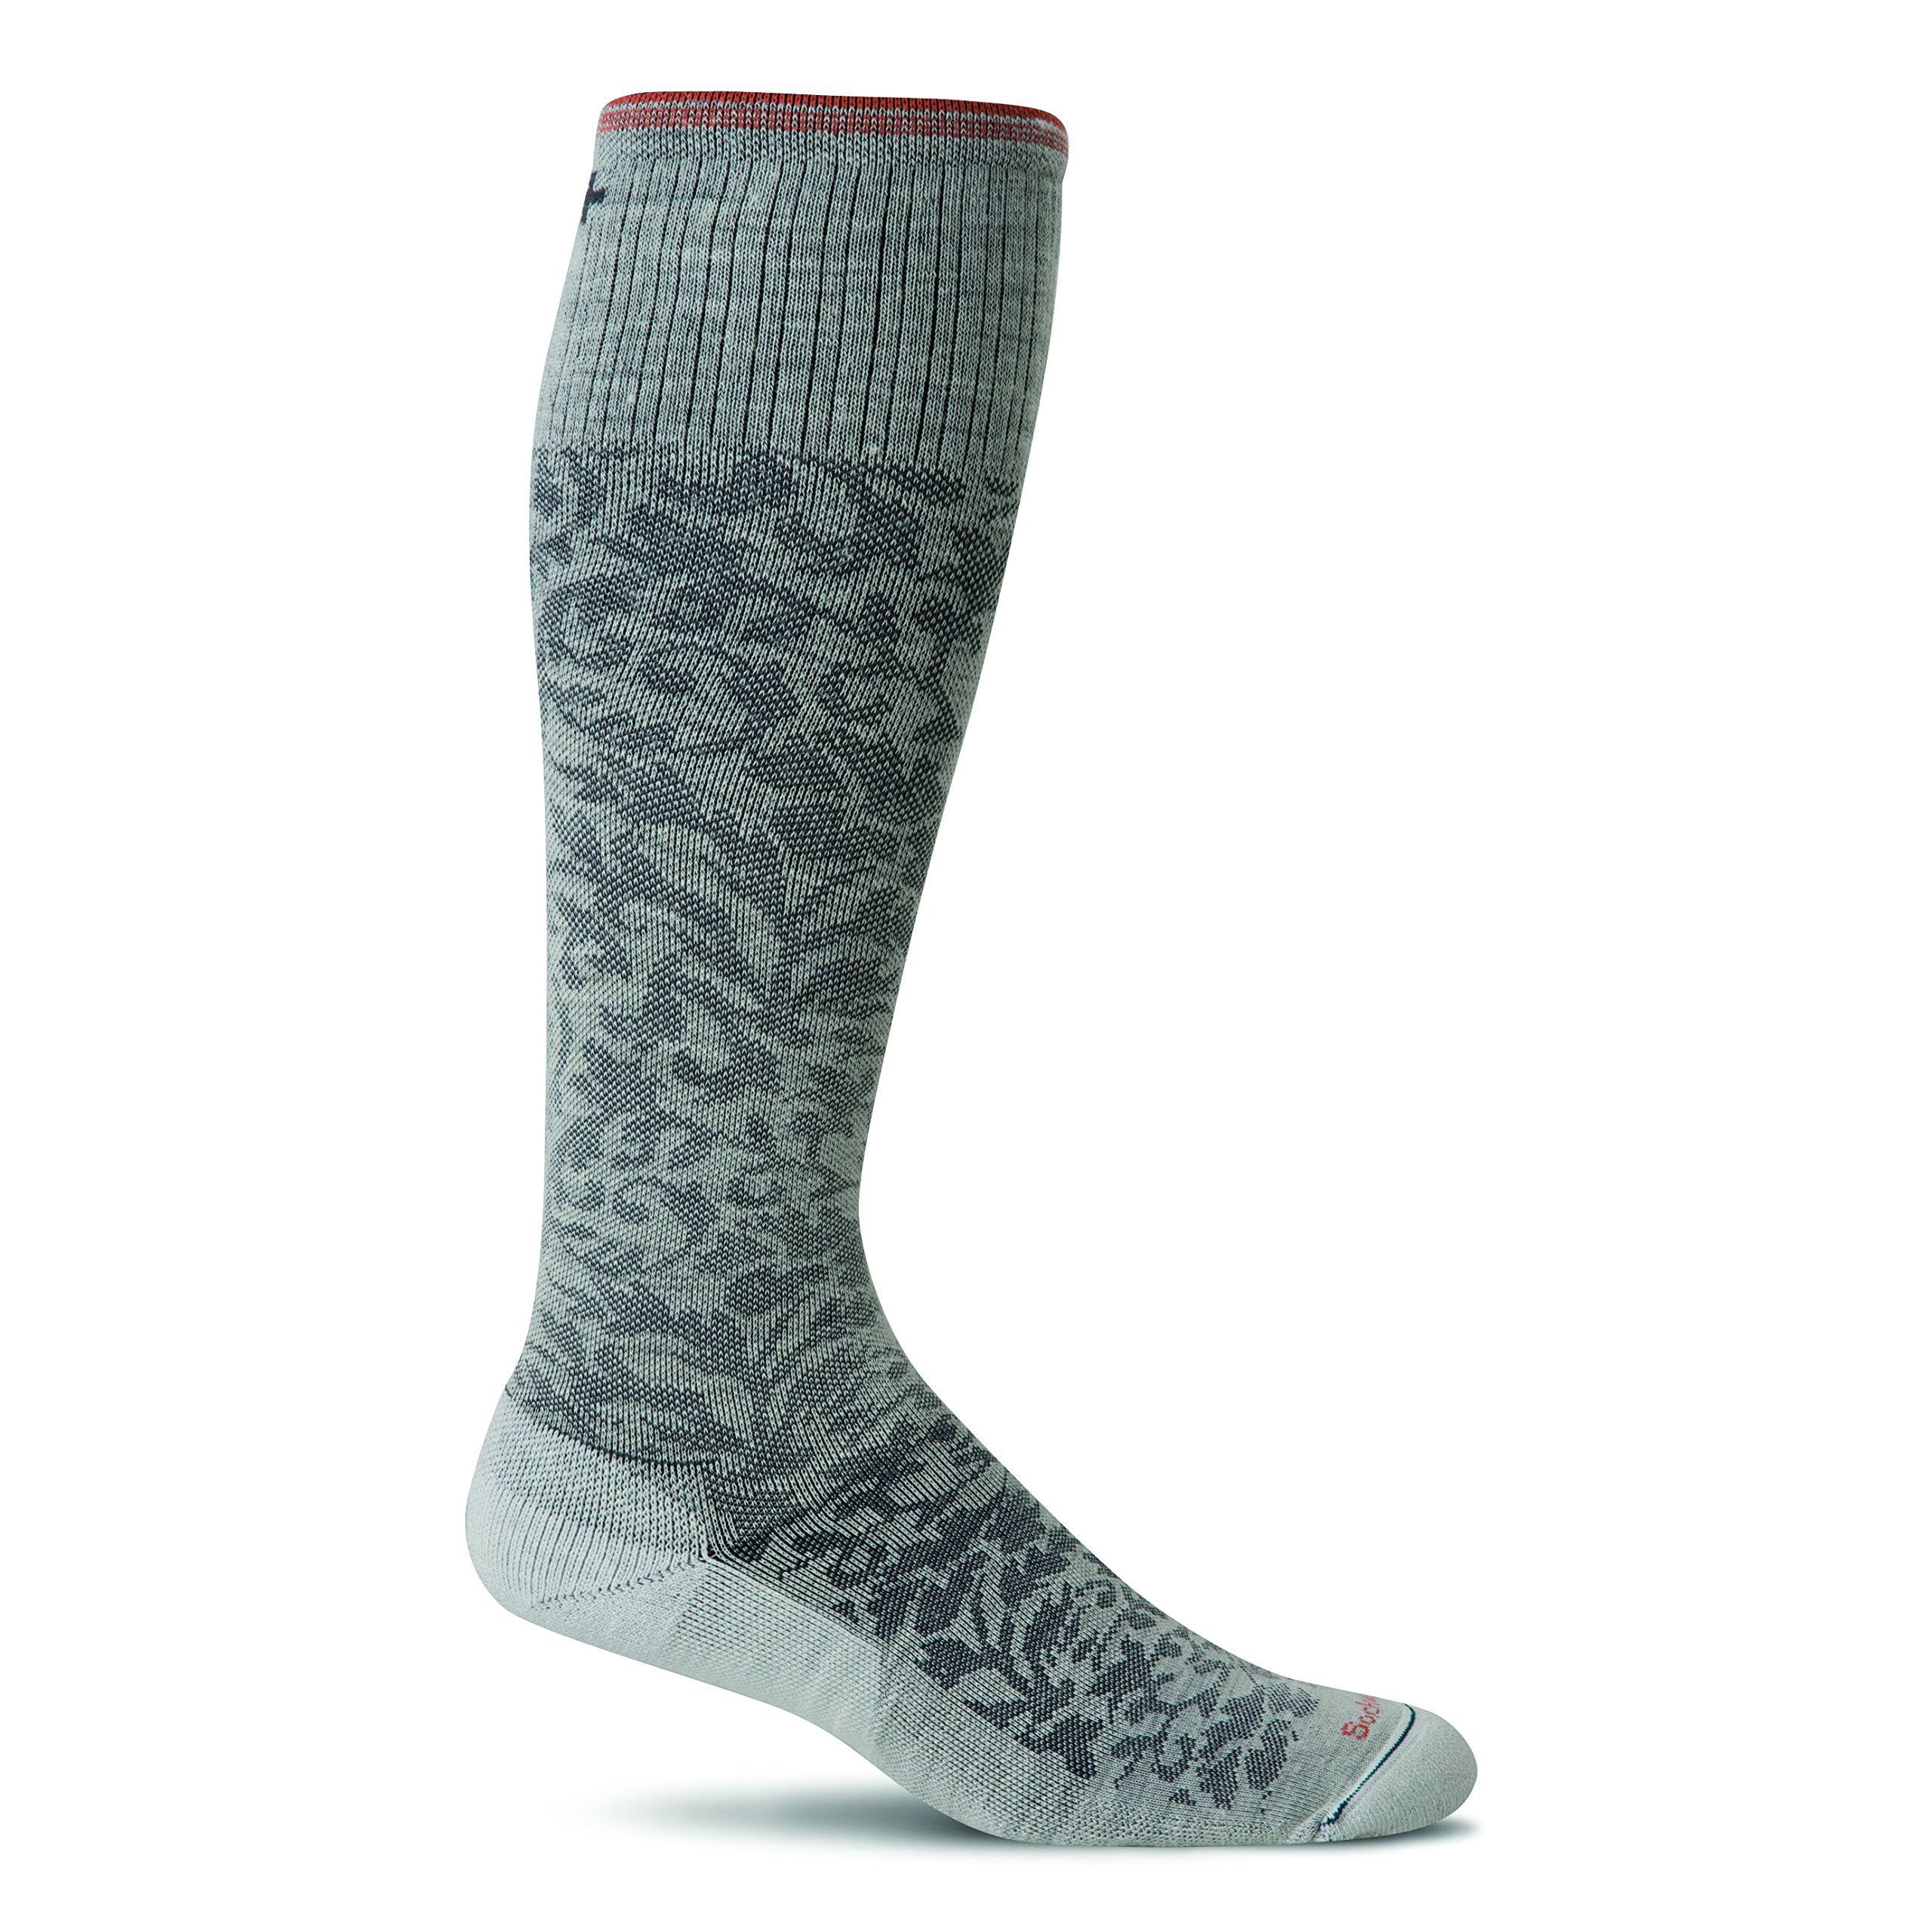 Women's Sockwell Damask Compression Socks : Oyster